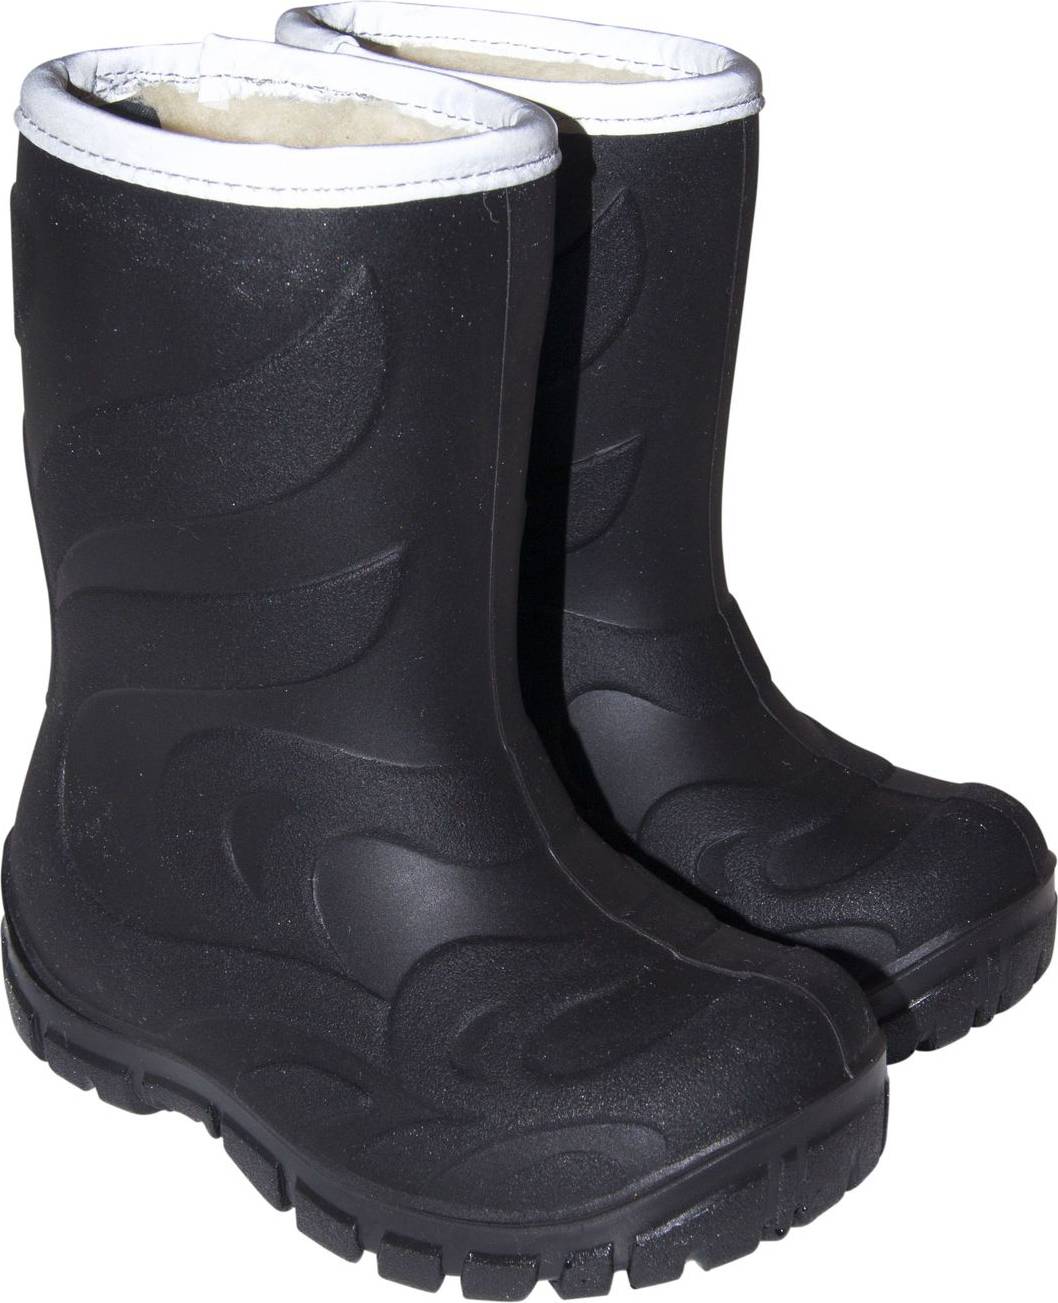  Bild på Mikk-Line Thermo Boots - Black vinterskor